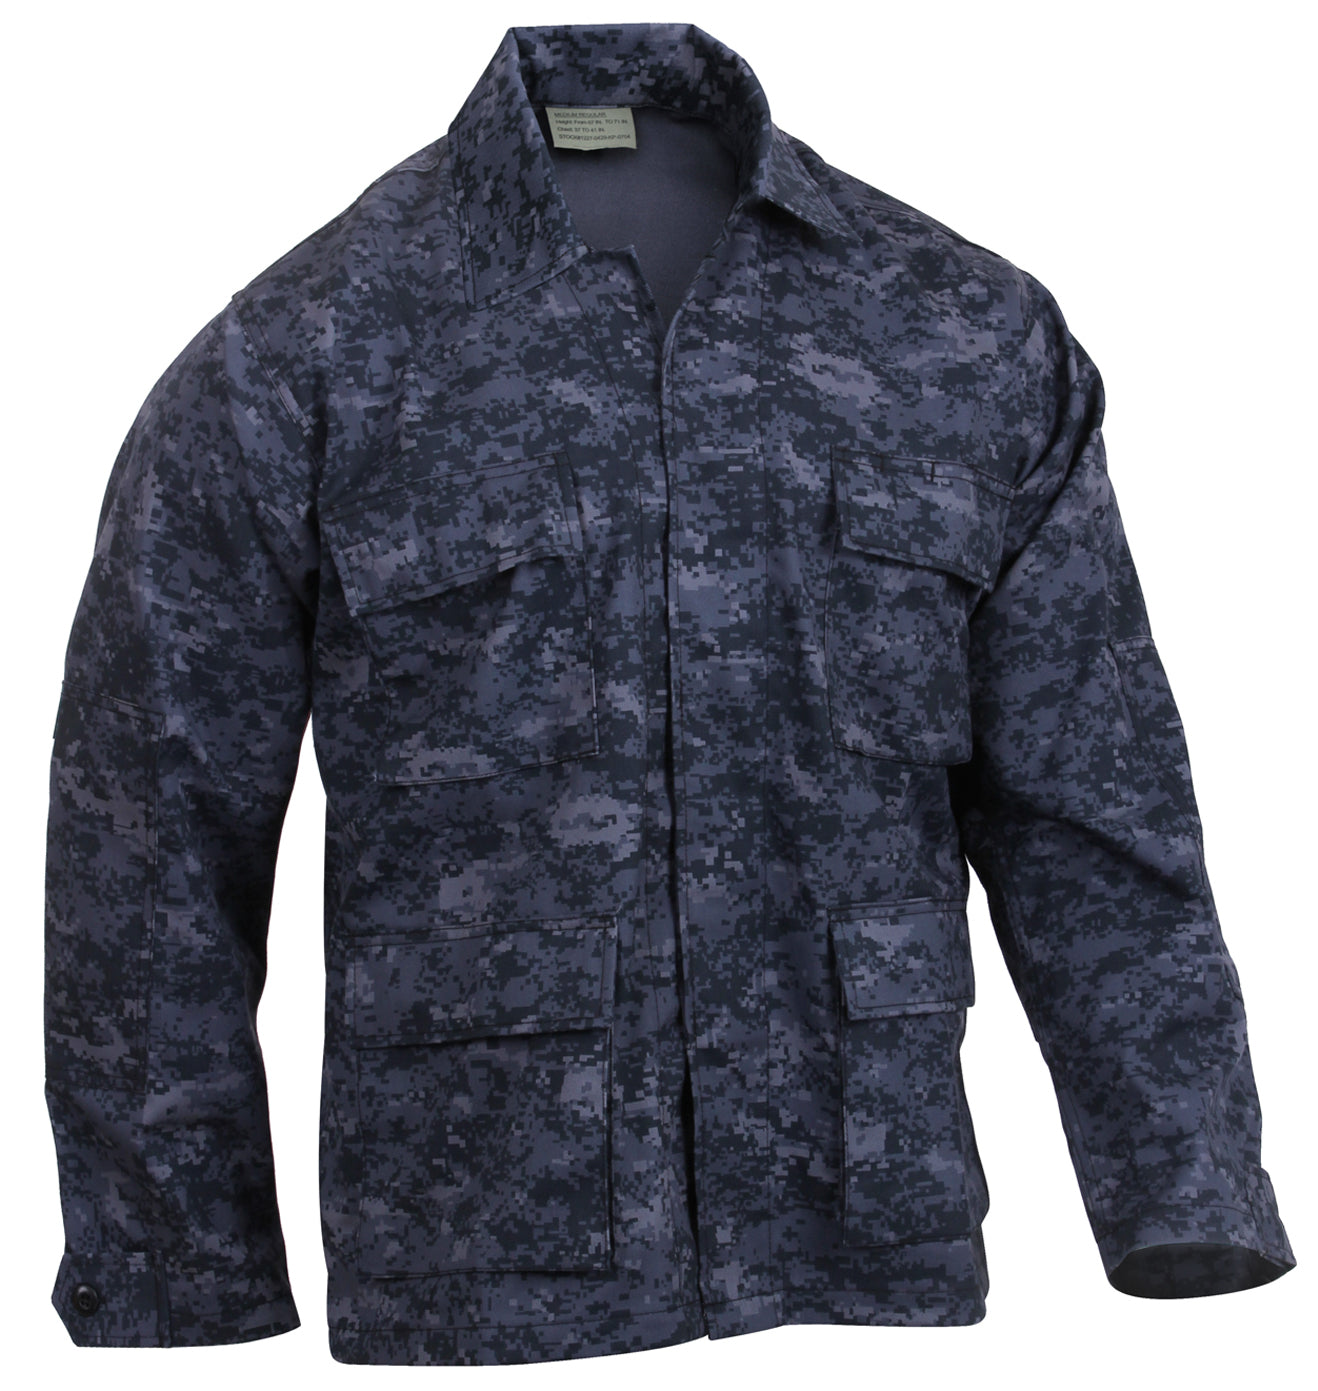 Milspec Digital Camo BDU Shirts BDUs MilTac Tactical Military Outdoor Gear Australia